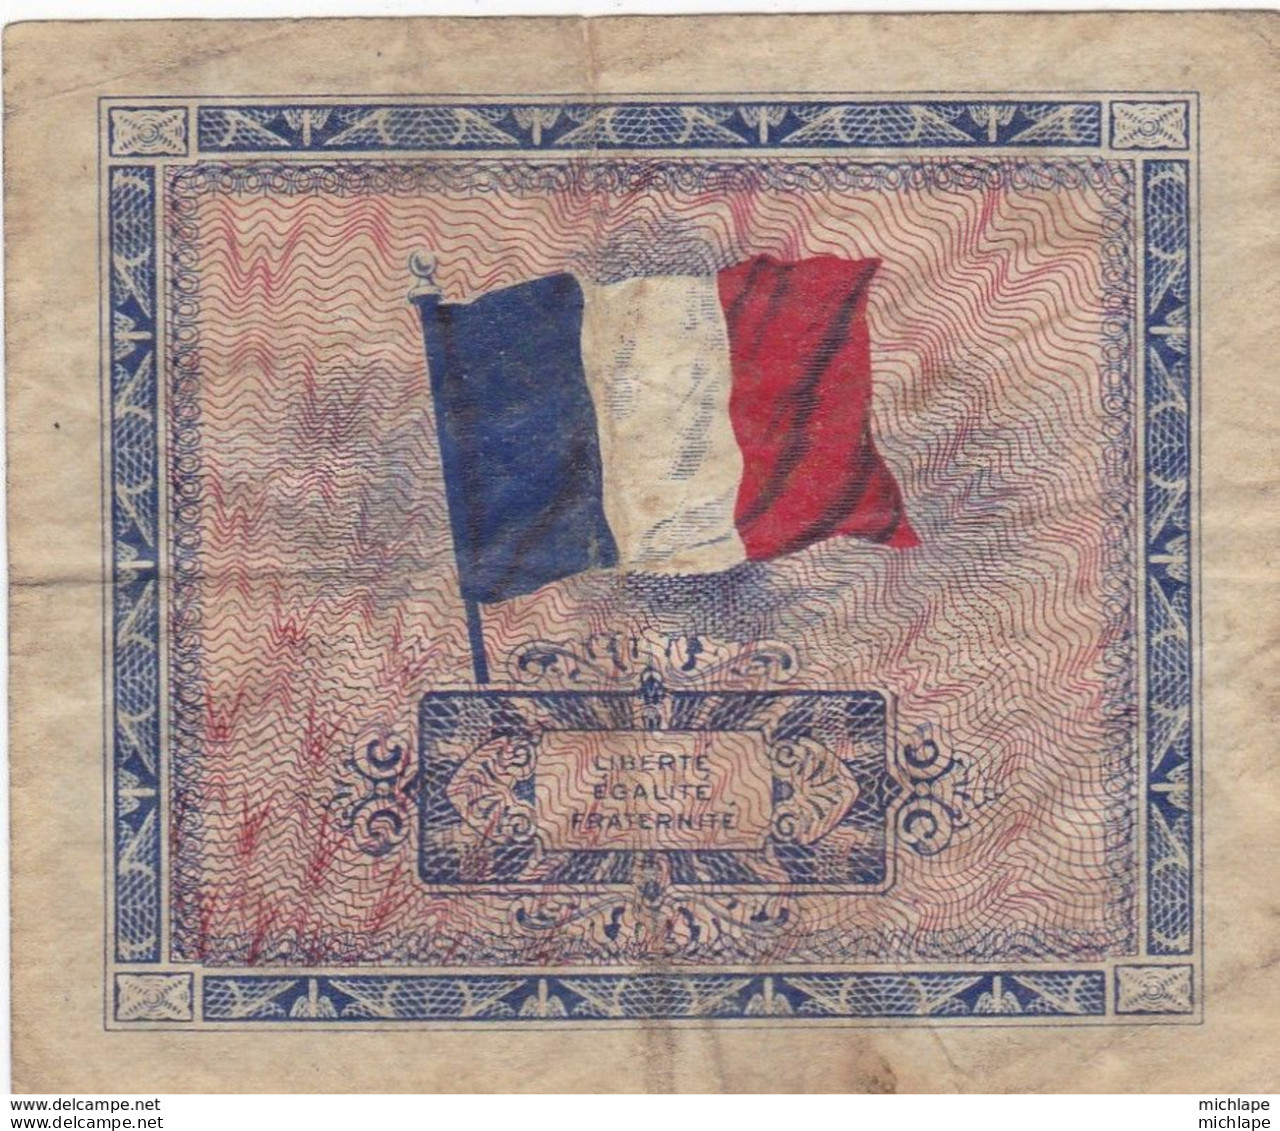 Billet  De 5 Francs  De 1944  En L'etat - Other & Unclassified